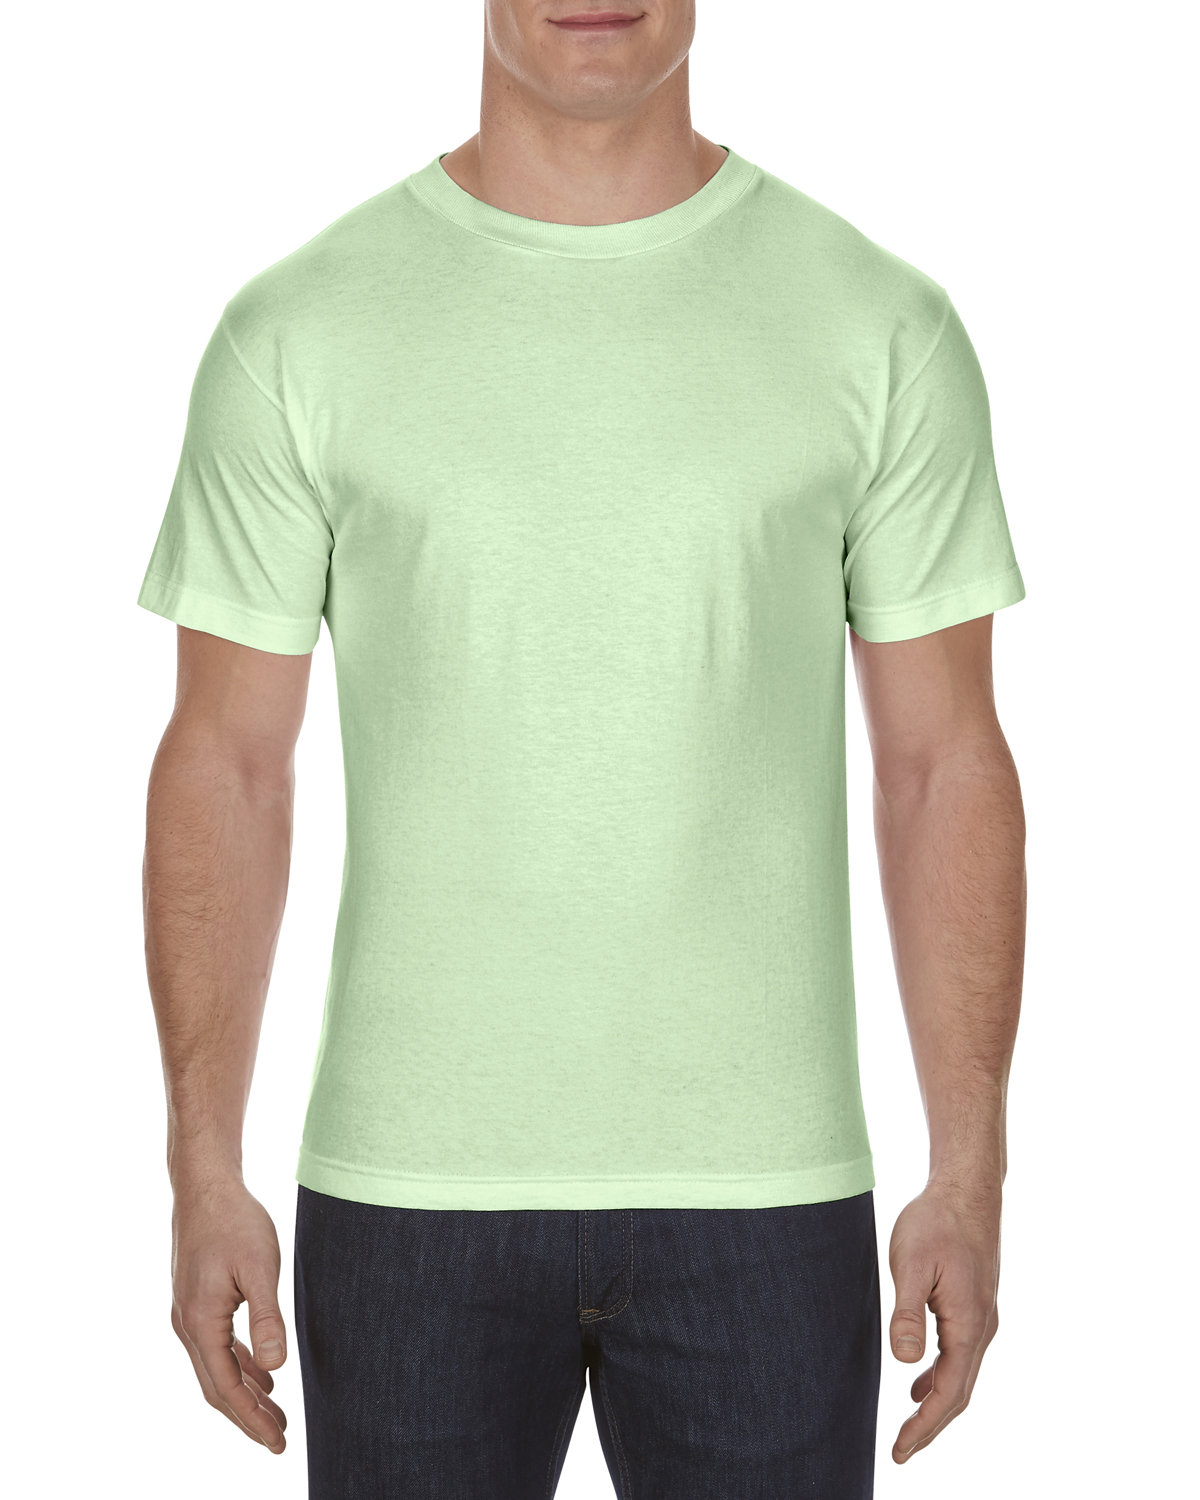 American Apparel Adult 6.0 oz., 100% Cotton T-Shirt MINT 